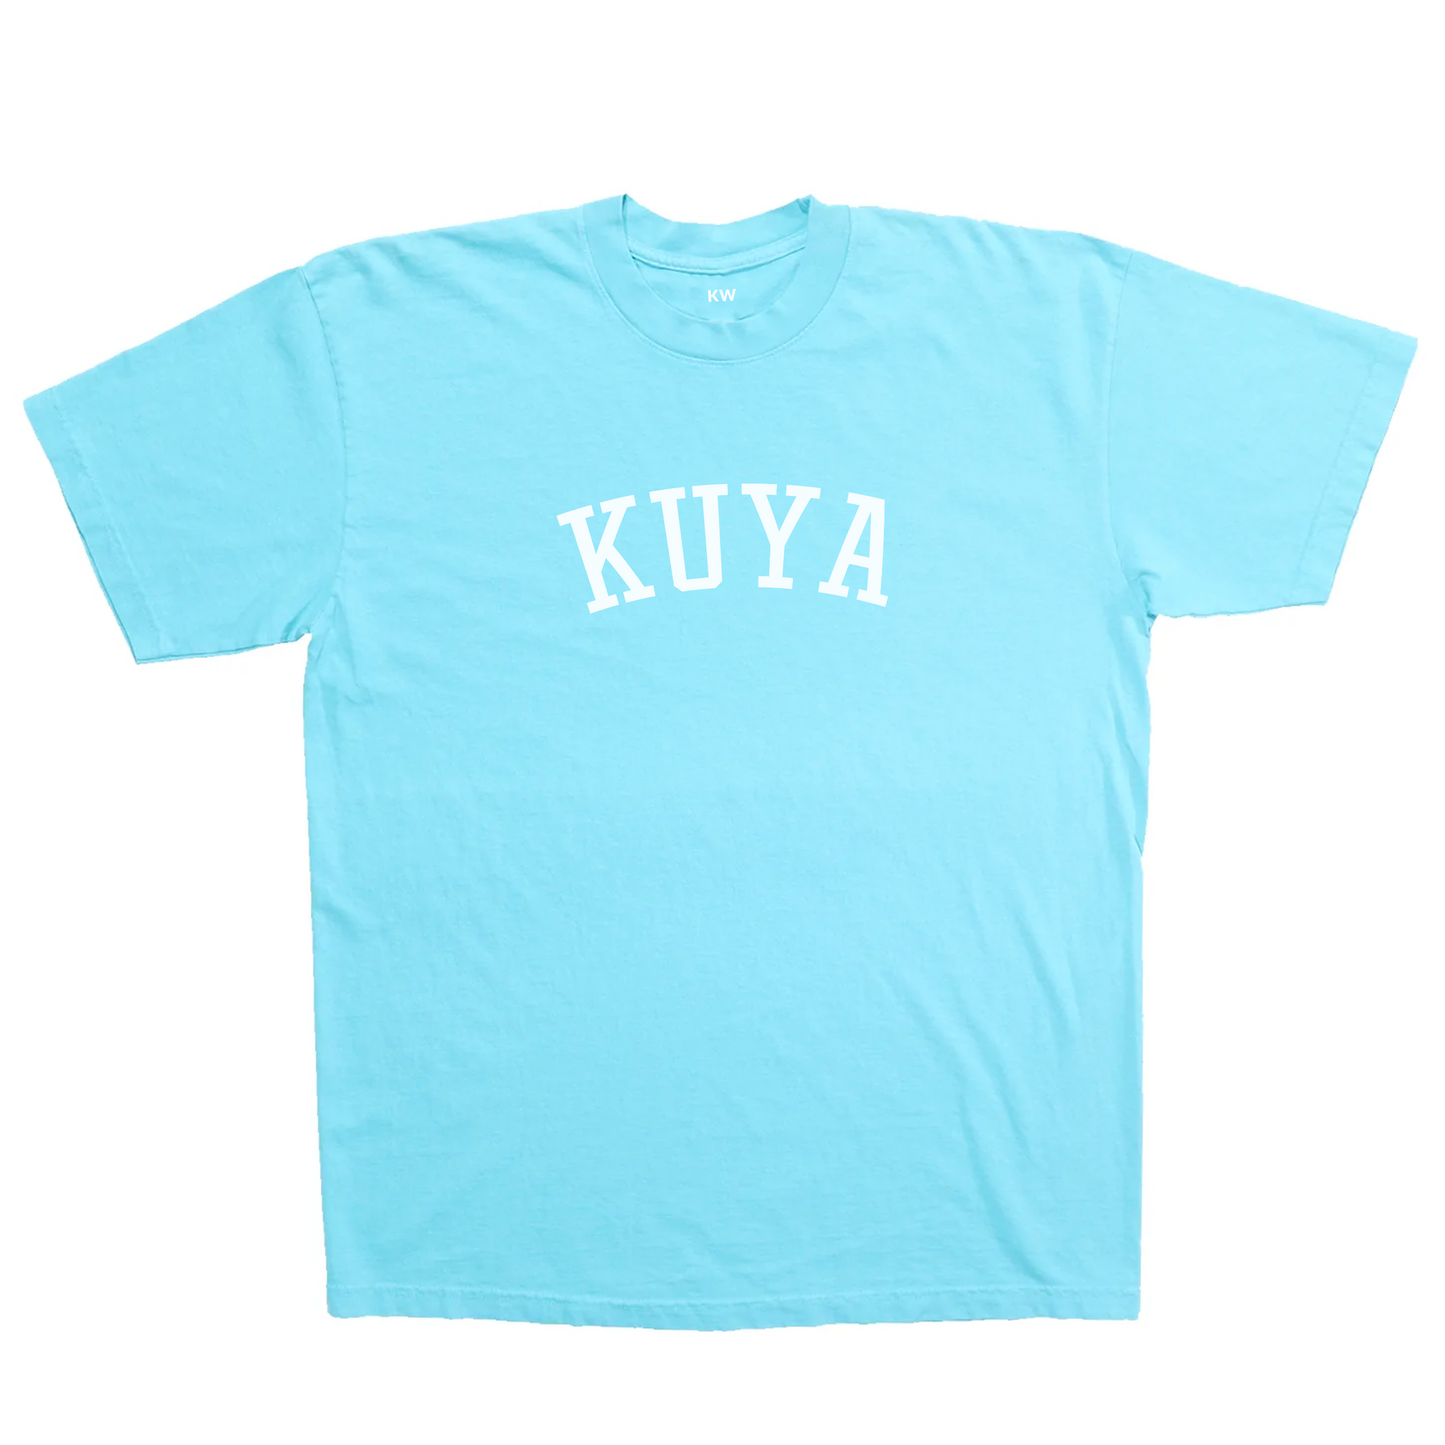 Kuya T-Shirt (Sky Blue)